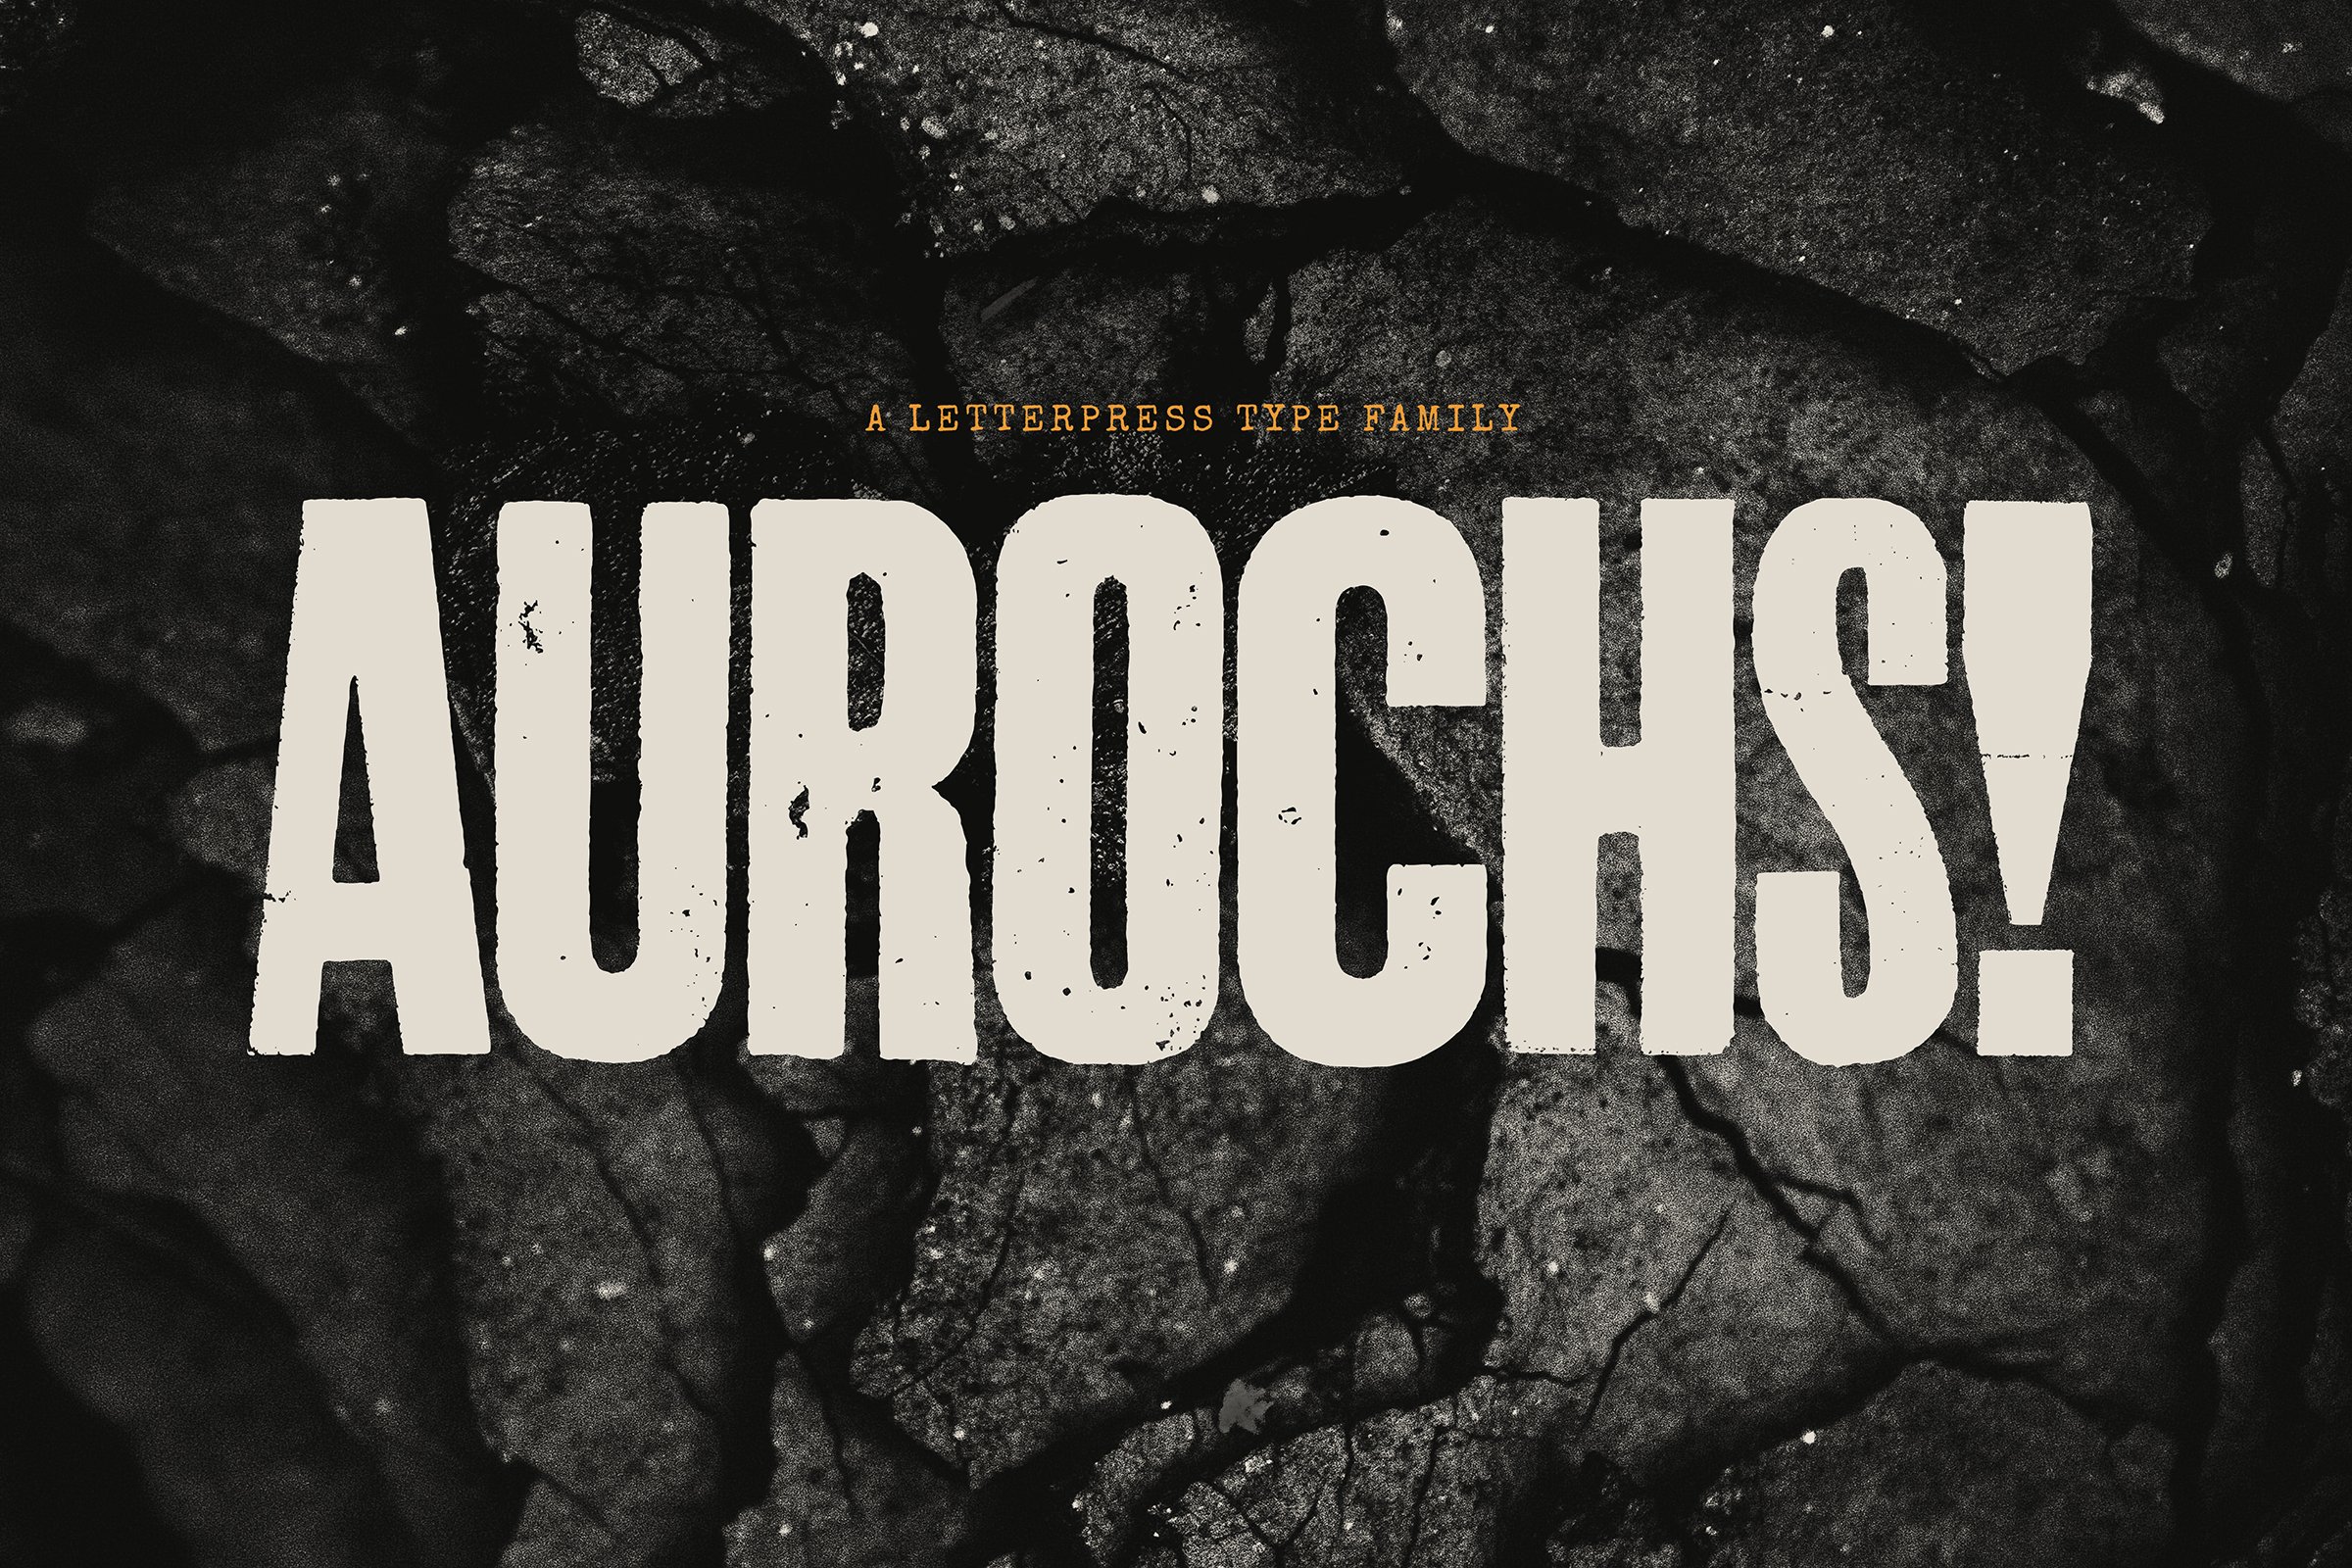 Aurochs: letterpress type family cover image.